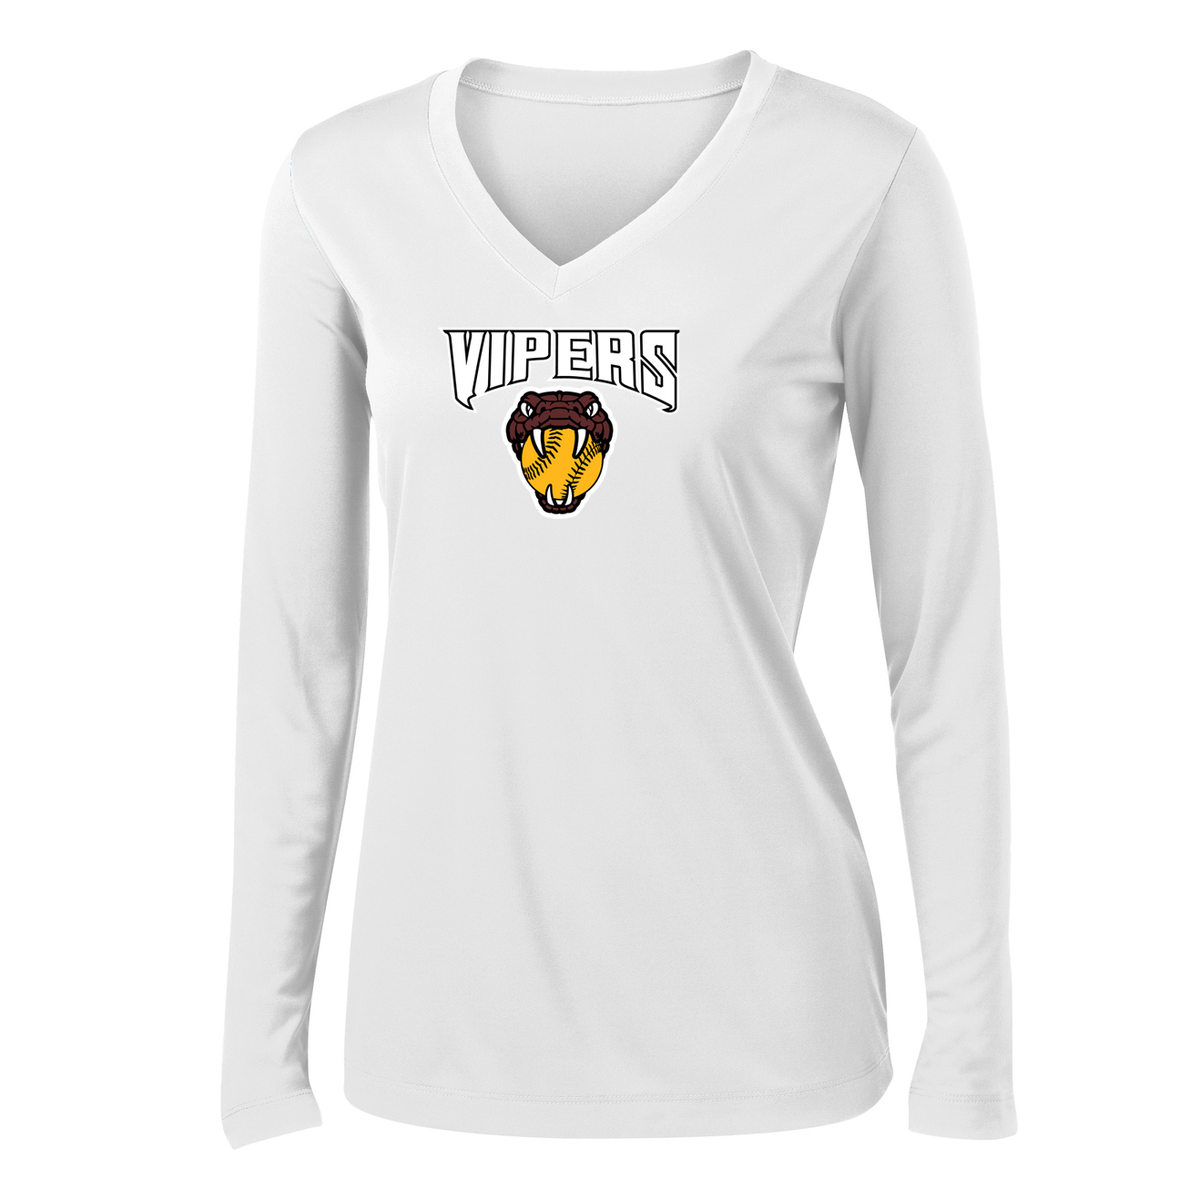 Vipers Softball  Women's Long Sleeve Performance Shirt